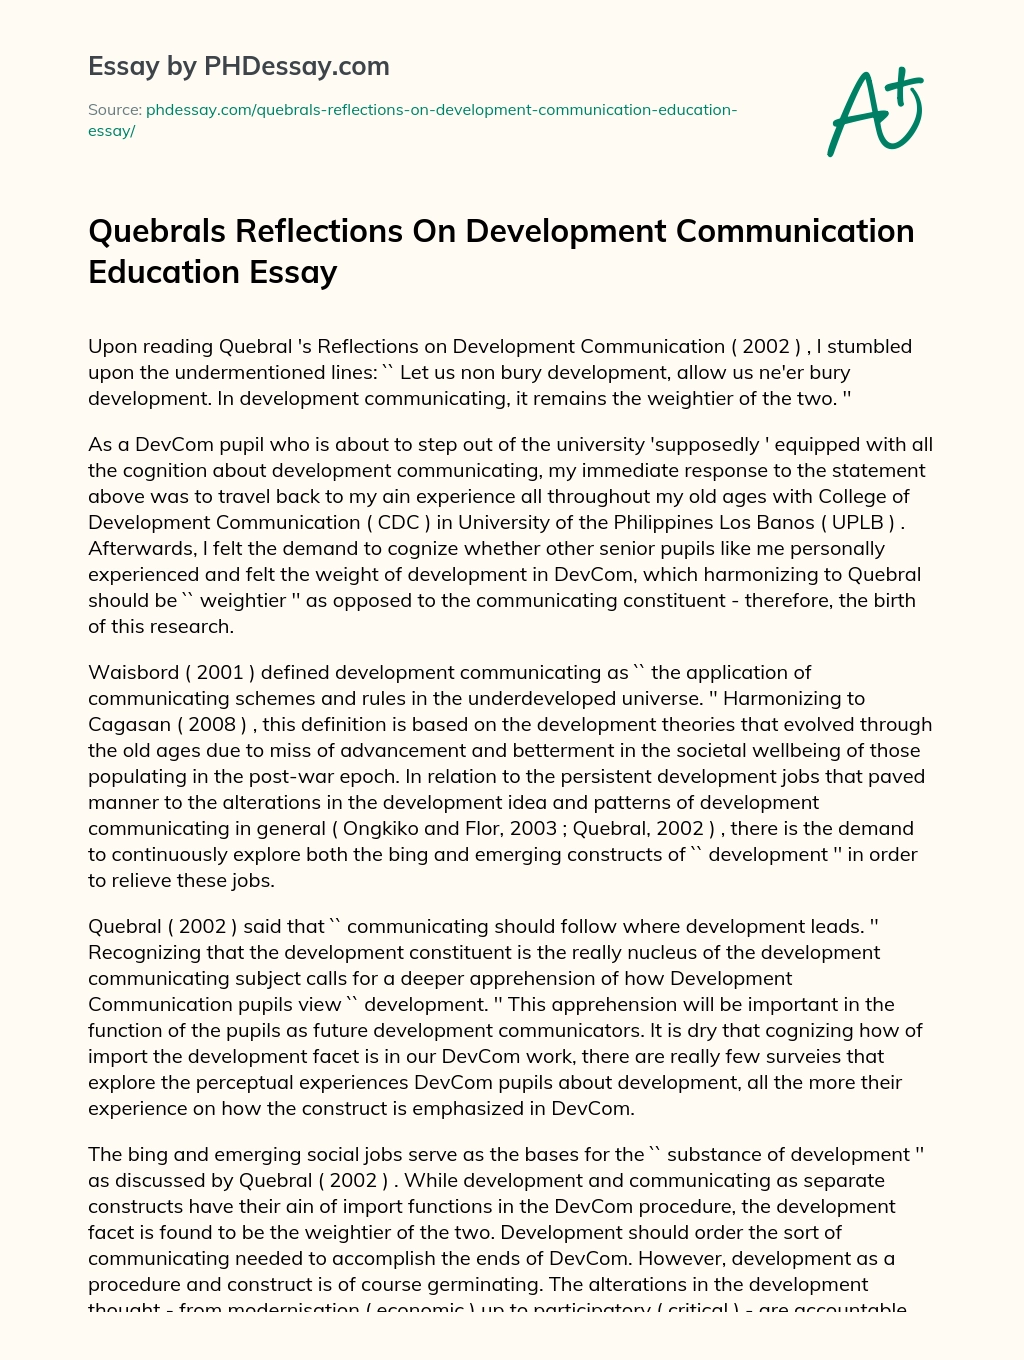 Quebrals Reflections On Development Communication Education Essay essay